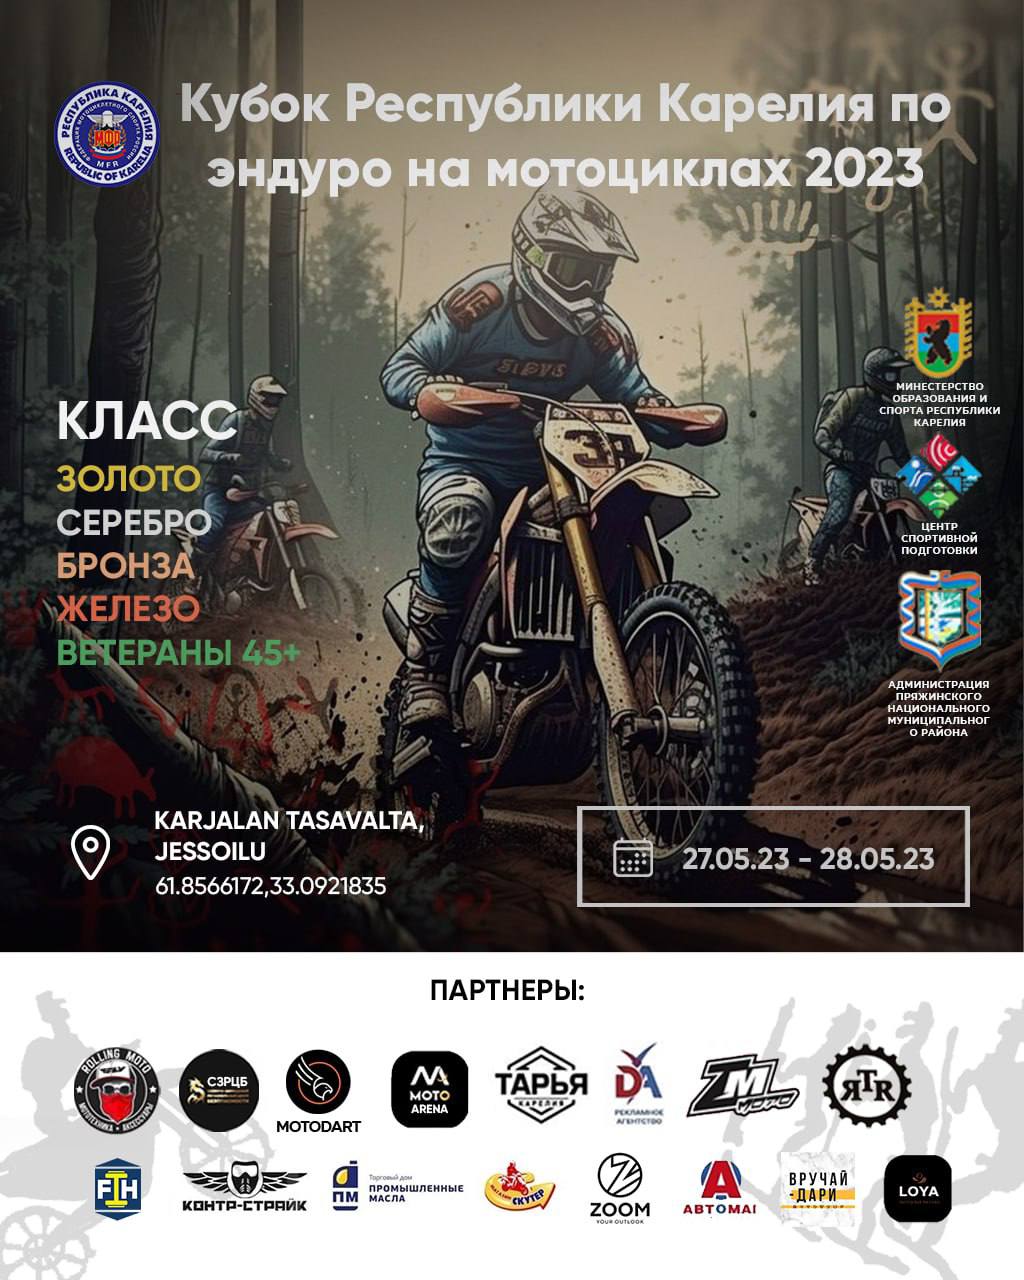 Кубок Республики Карелии по эндуро на мотоциклах